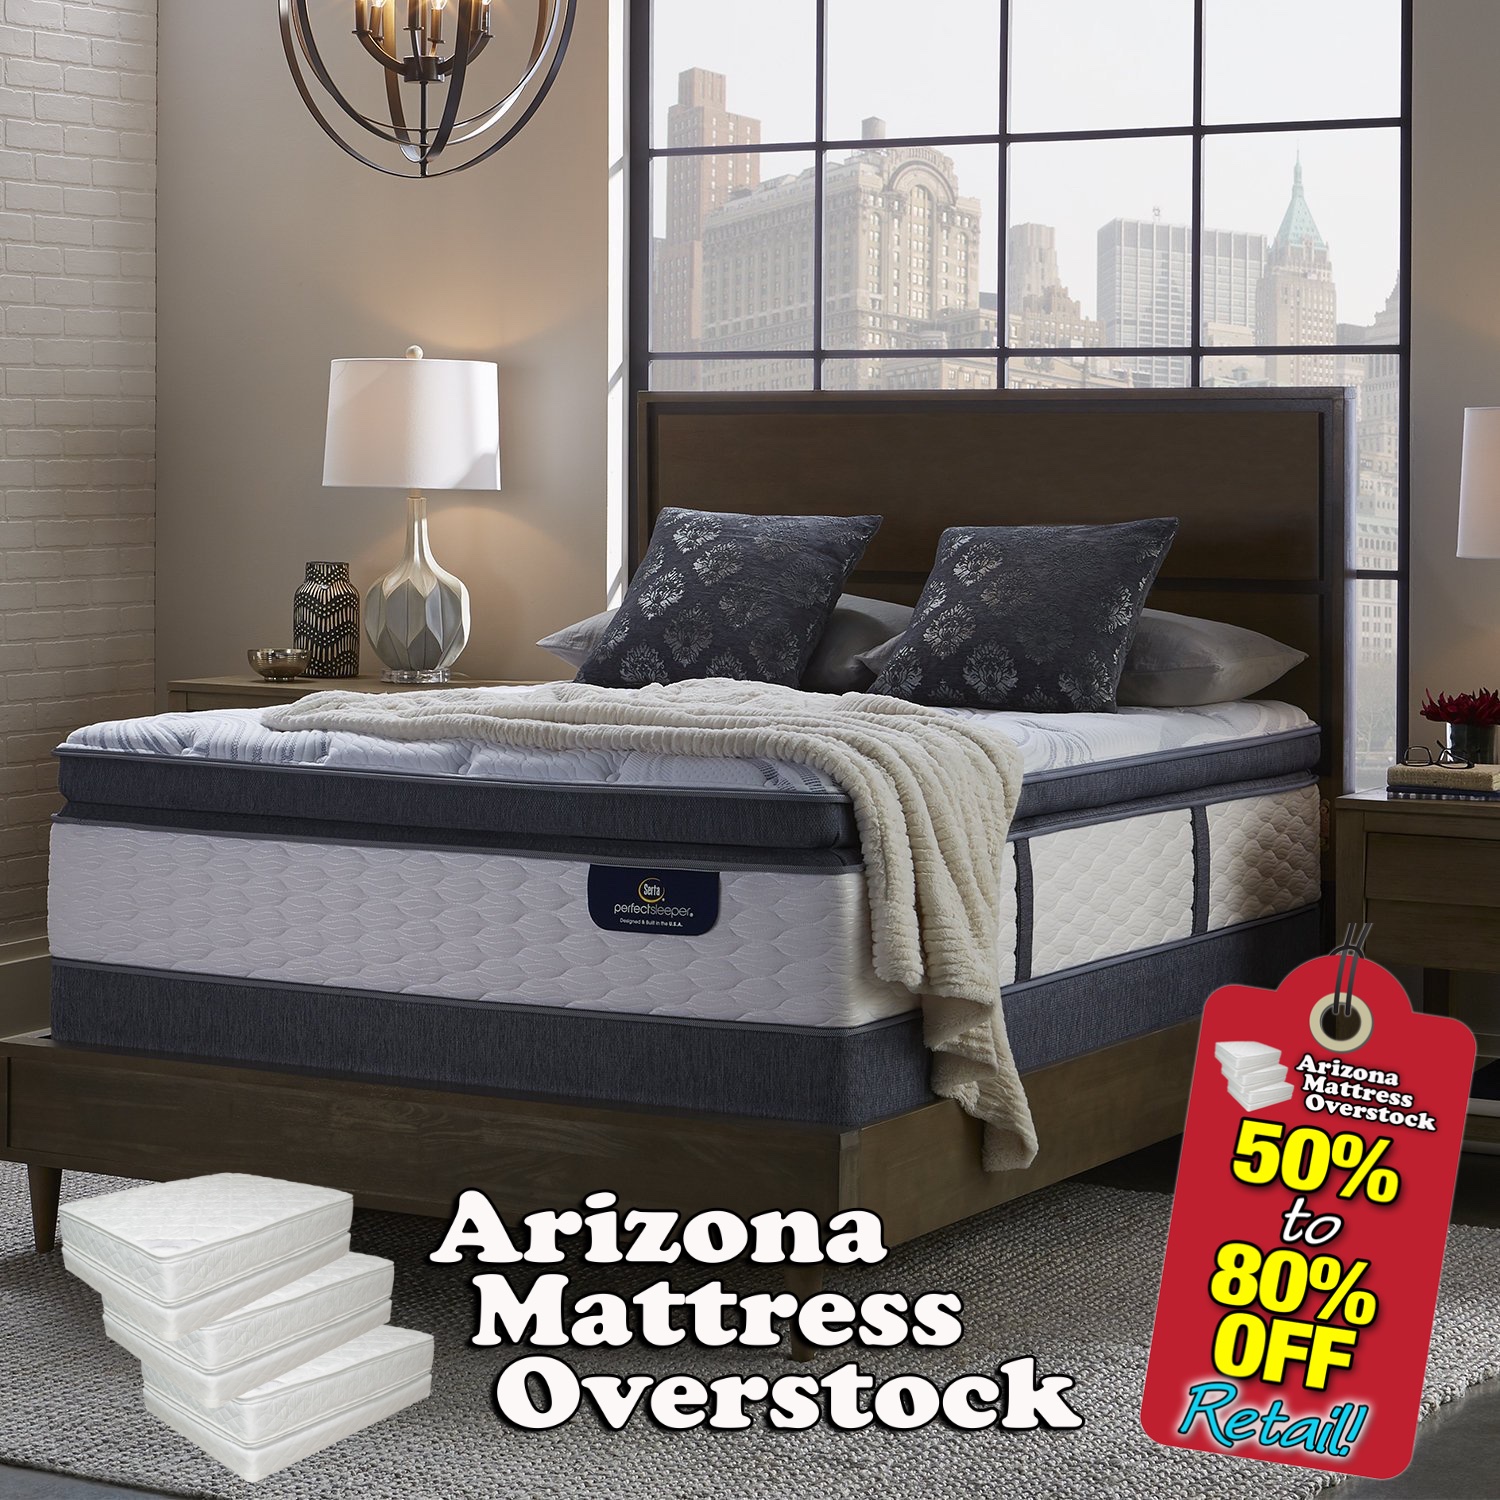 49 - ArizonaMattressOverstock-Tempe-Phoenix-Serta-Perfect-Sleeper 